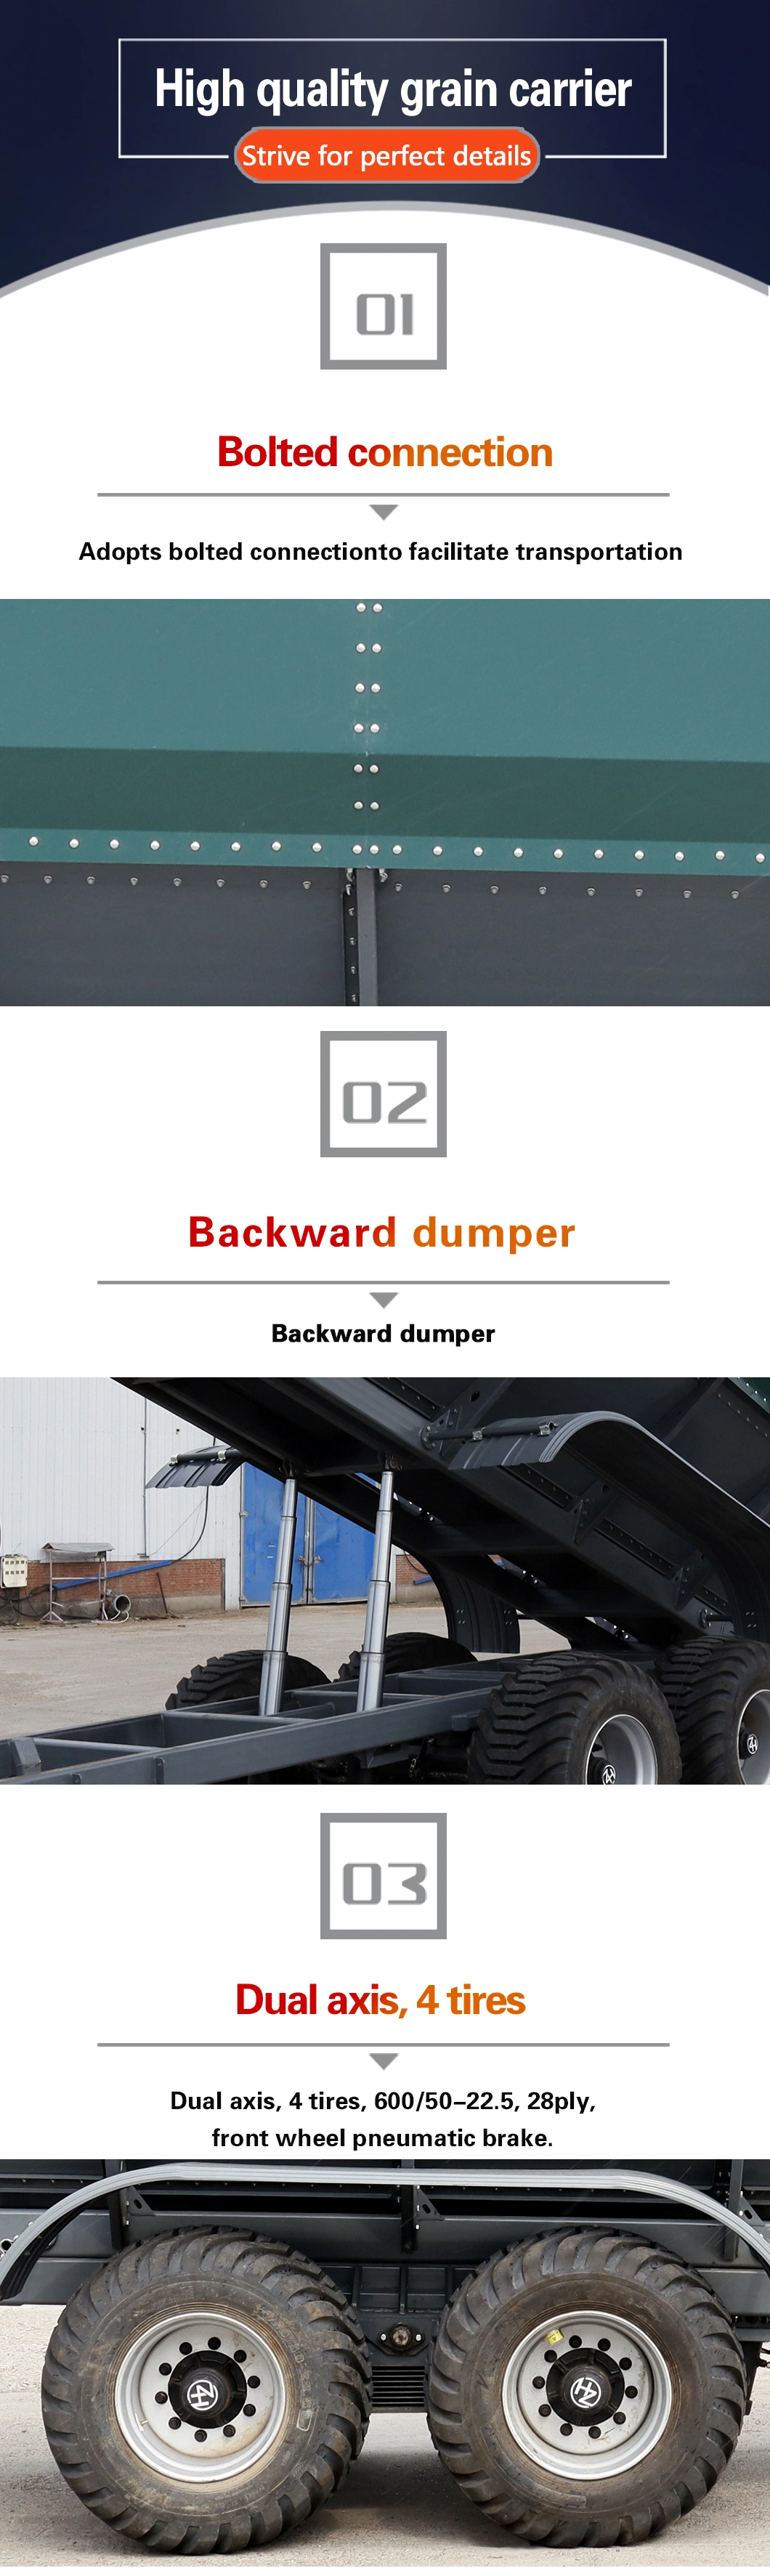 Dump Backward Sheet Metal Sides Small Excavator Tradesman Horse Car Trailer Bunker